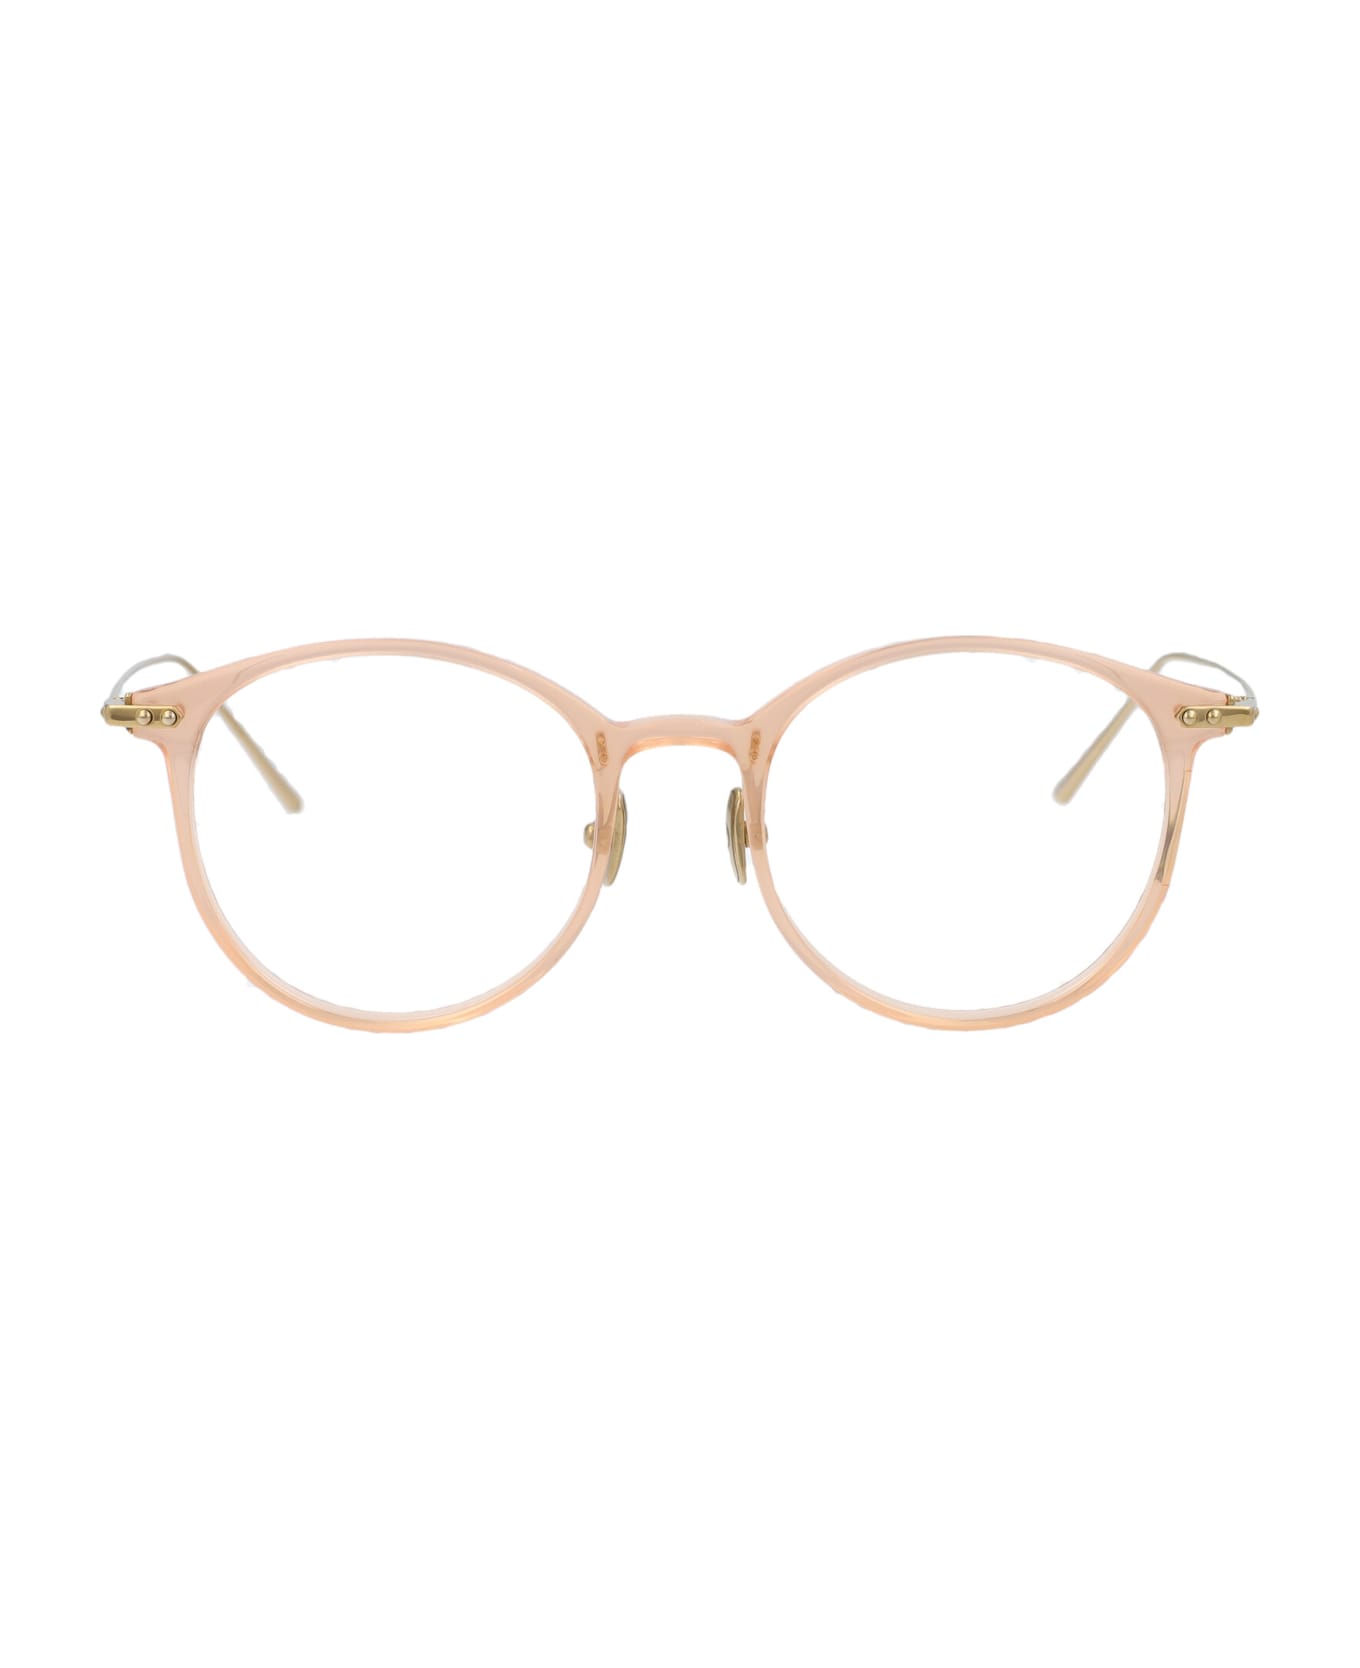 Linda Farrow Gray Glasses - 20 PEACH/ LIGHT GOLD/ OPTICAL アイウェア